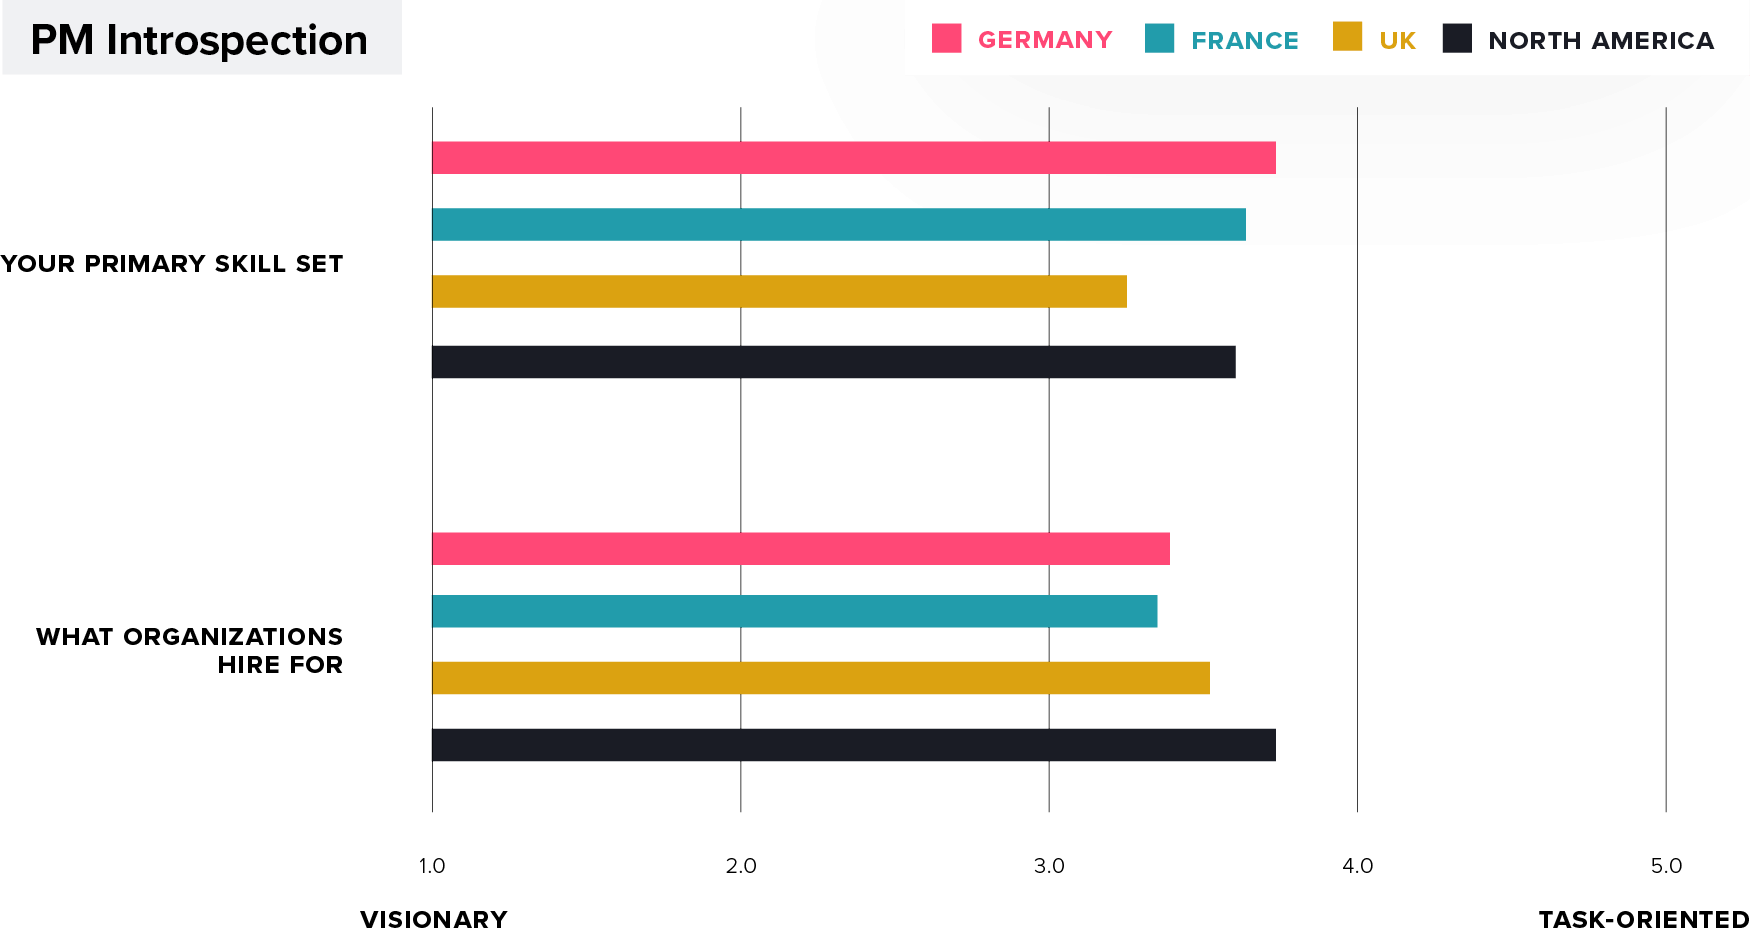 Product Management Introspection: Germany, France, UK, North America